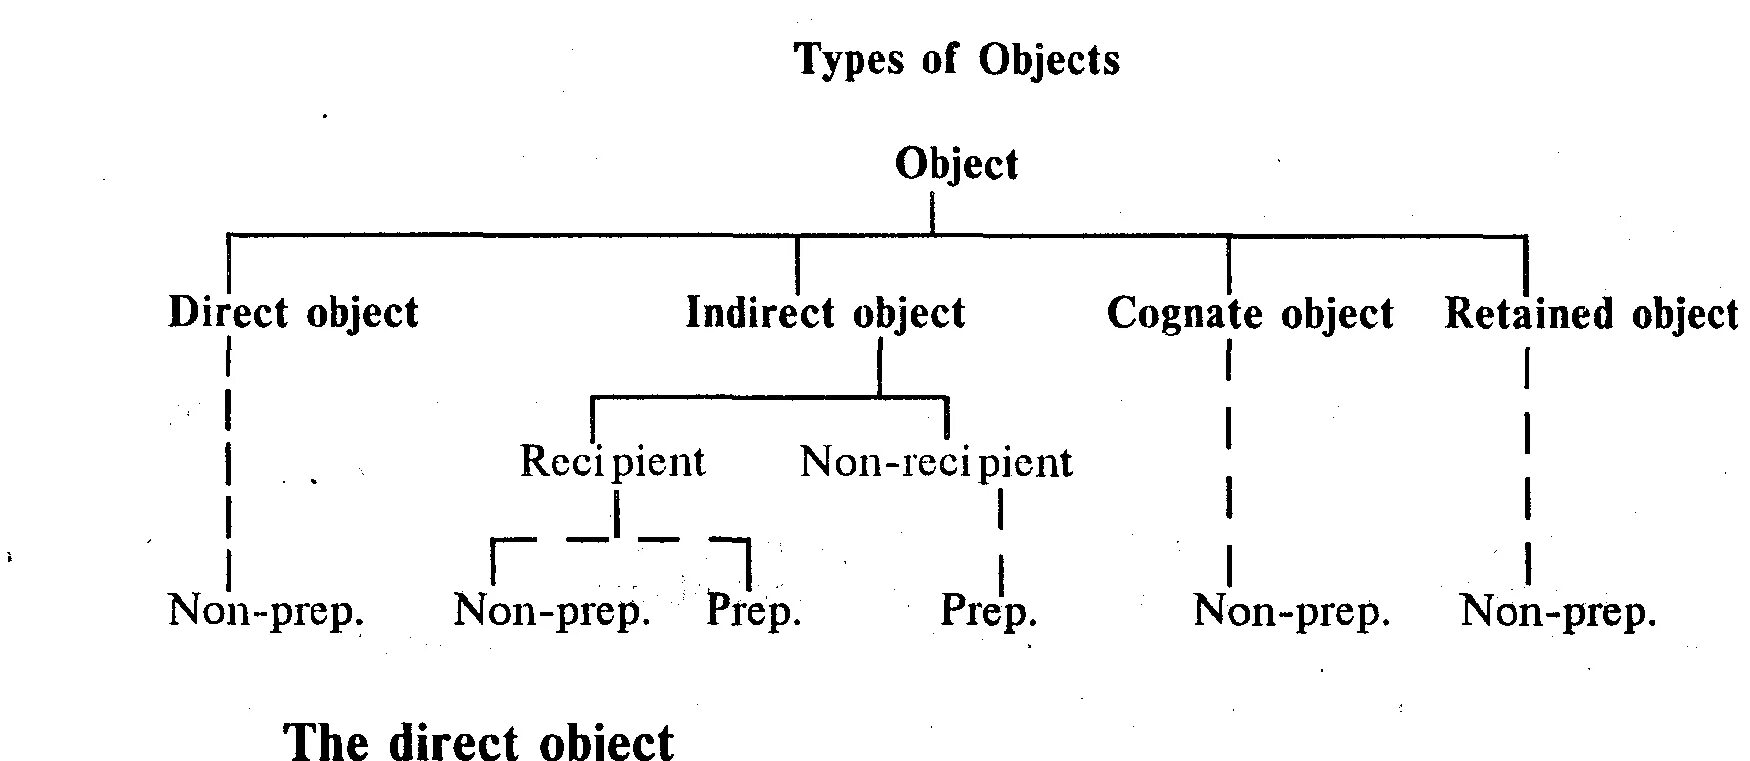 Https object. Types of object. Types of objects in English. Types of objects in English Grammar. The object.